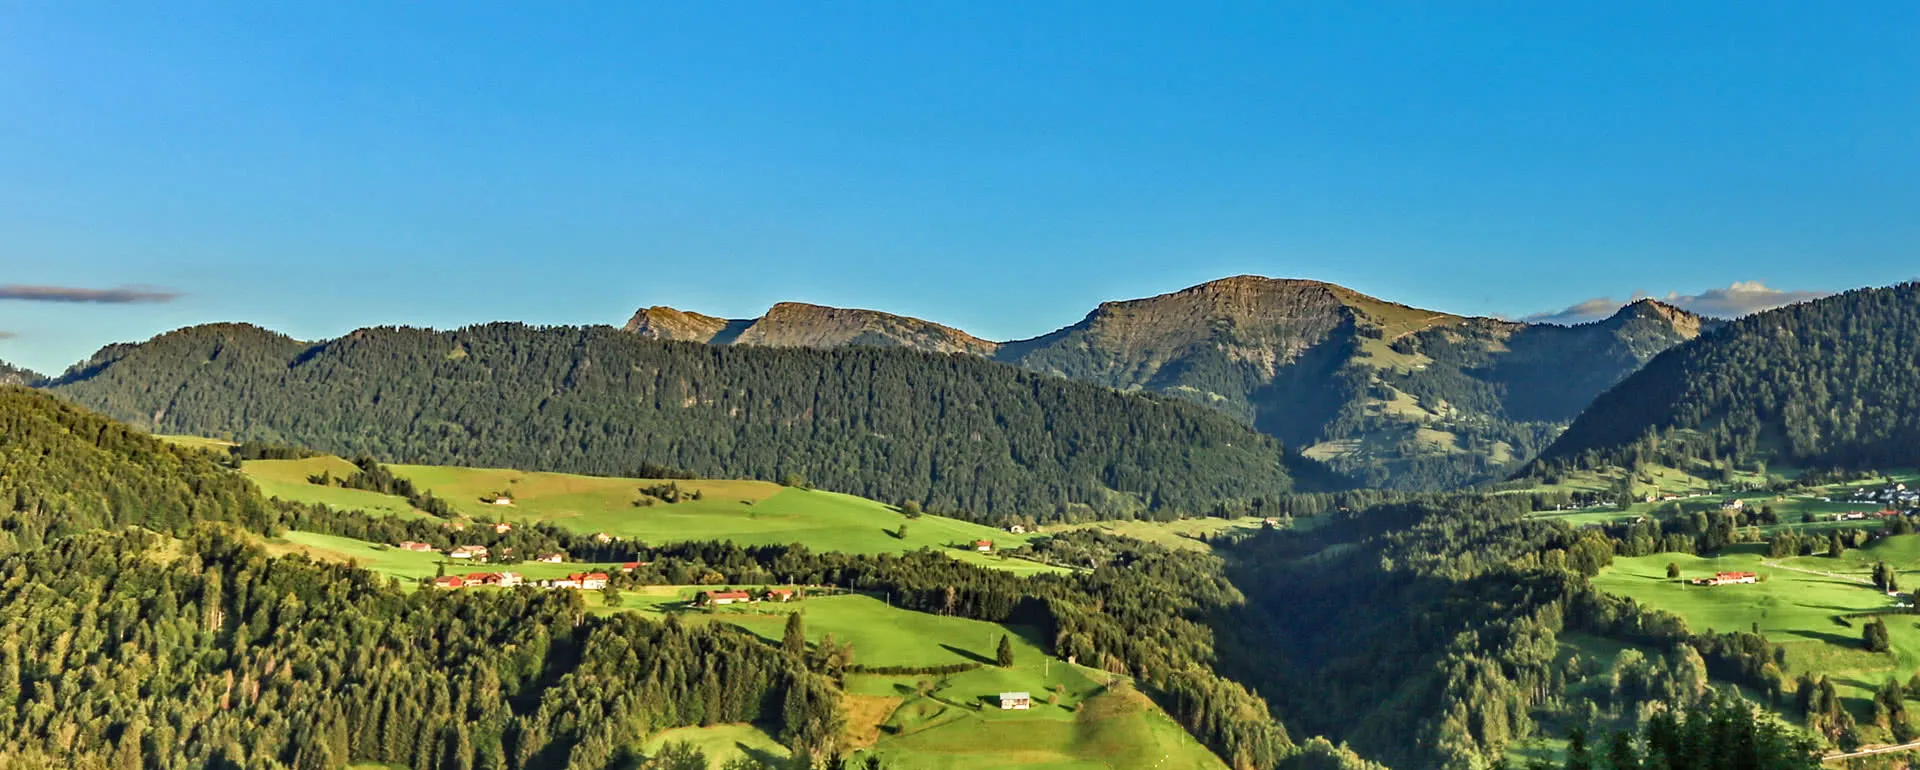 Oberstaufen panorama image